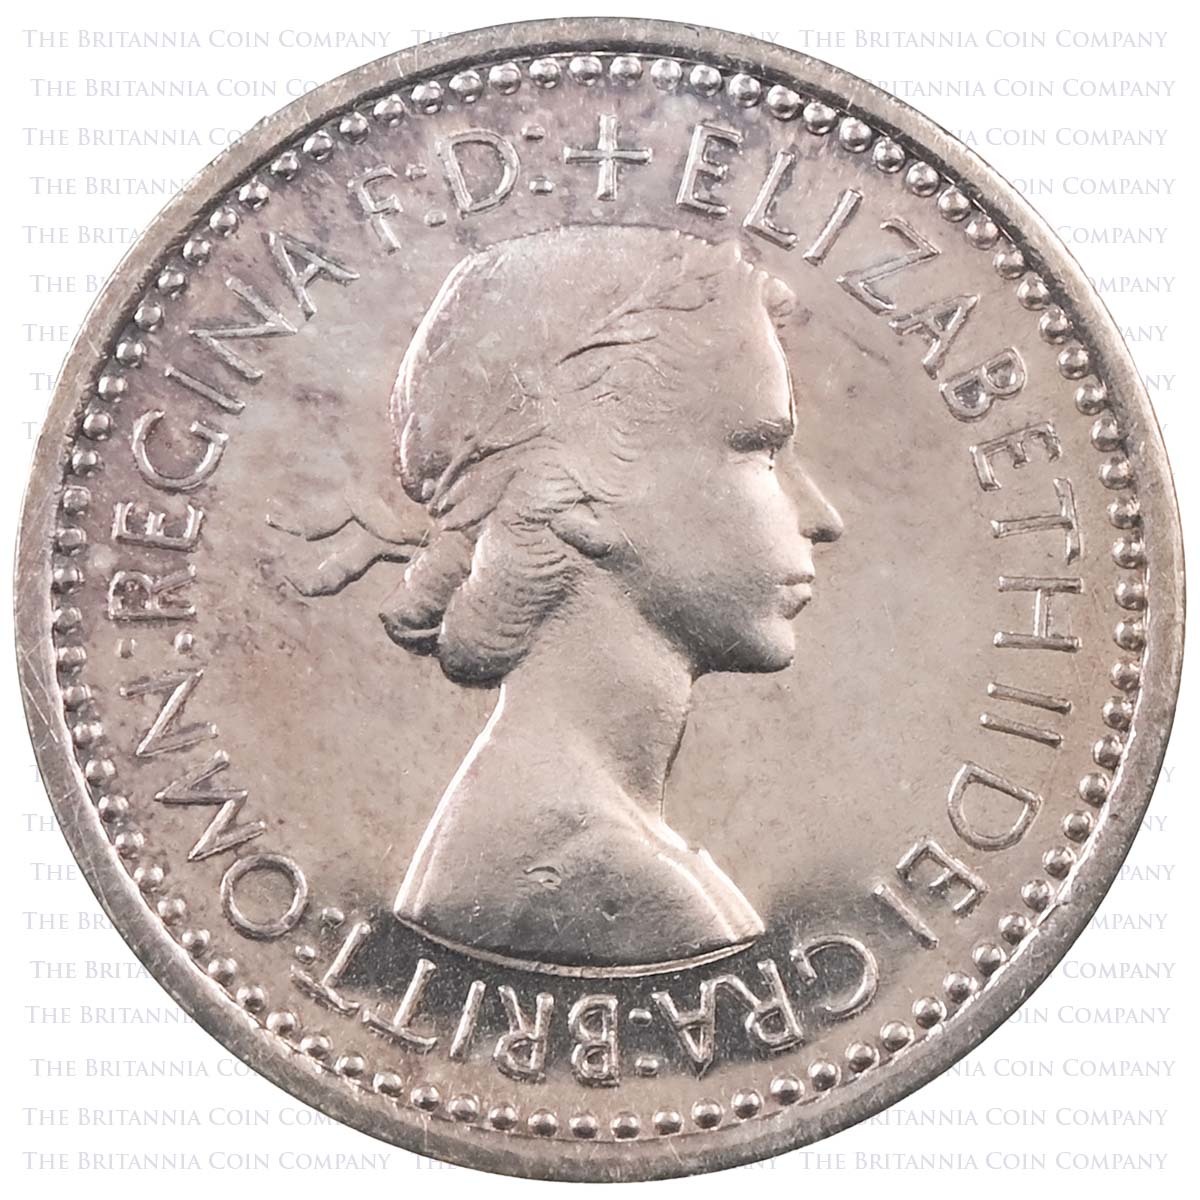 1953 Elizabeth II Maundy Money Silver 4 Coin Set In Original Box Threepence Obverse